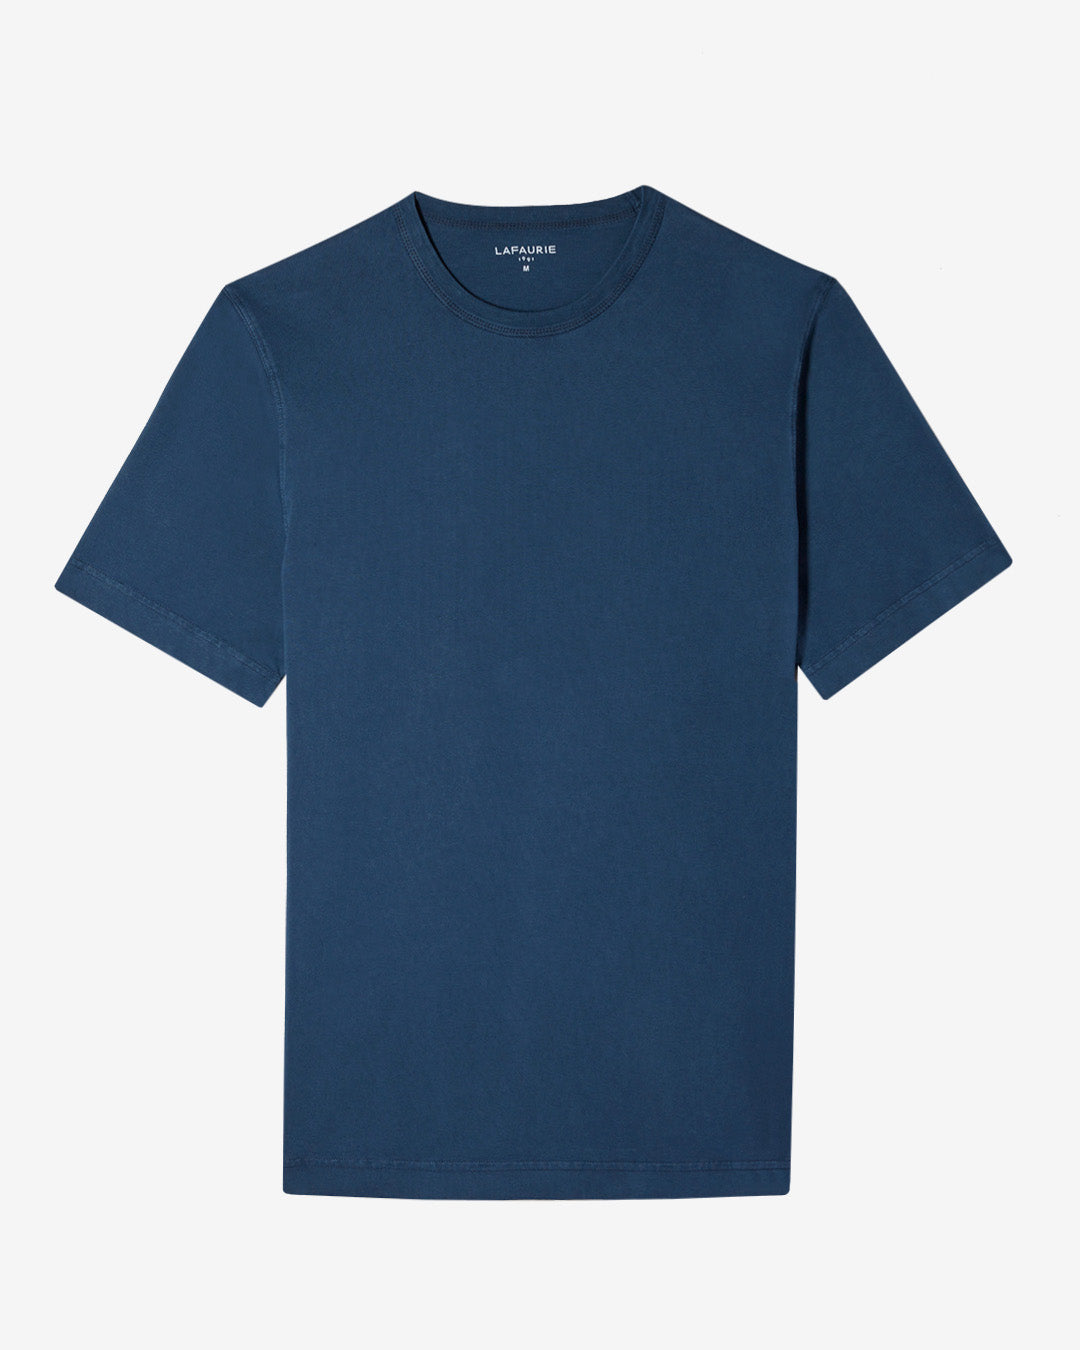 BERNIE T-shirt - Navy